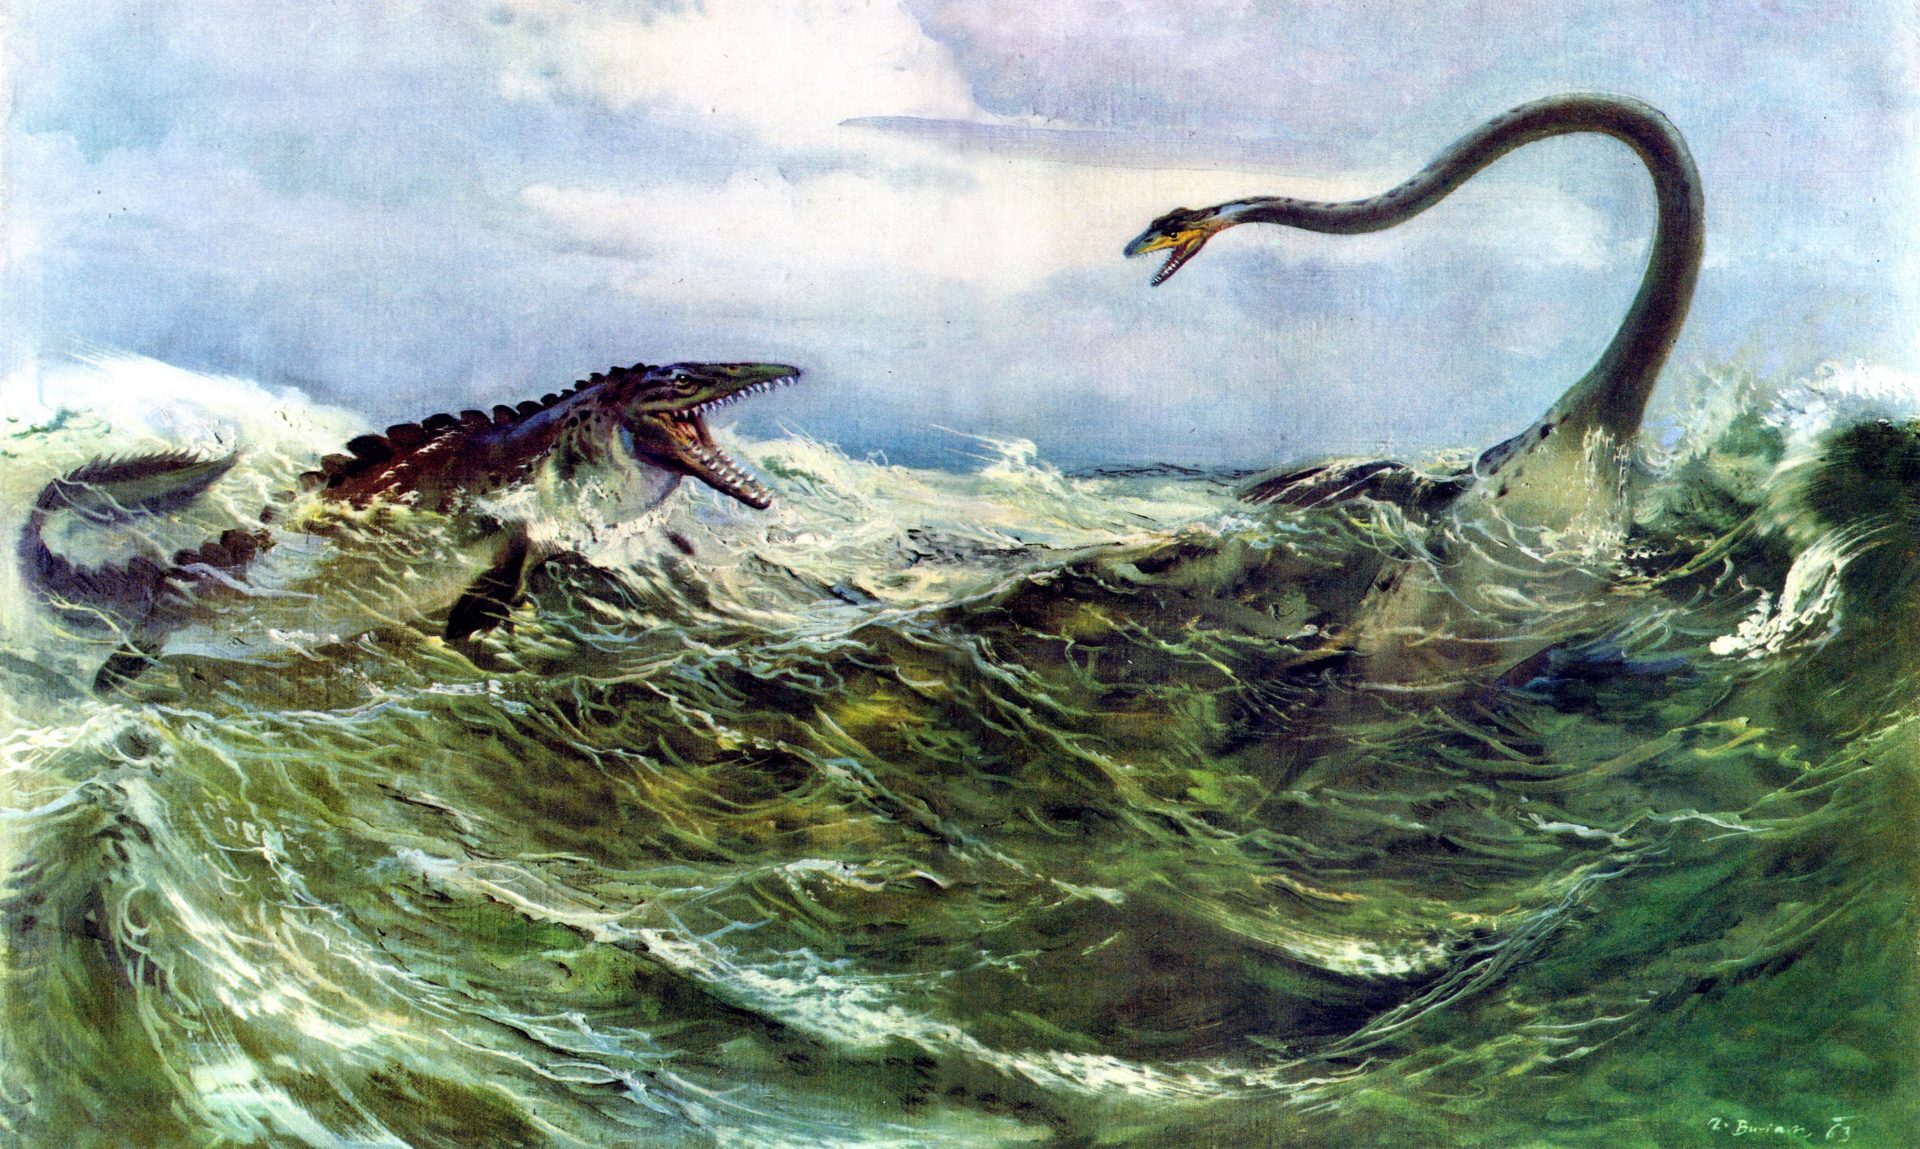 Tylosaurus attacks Elasmosaurus, by Zdenek Burian